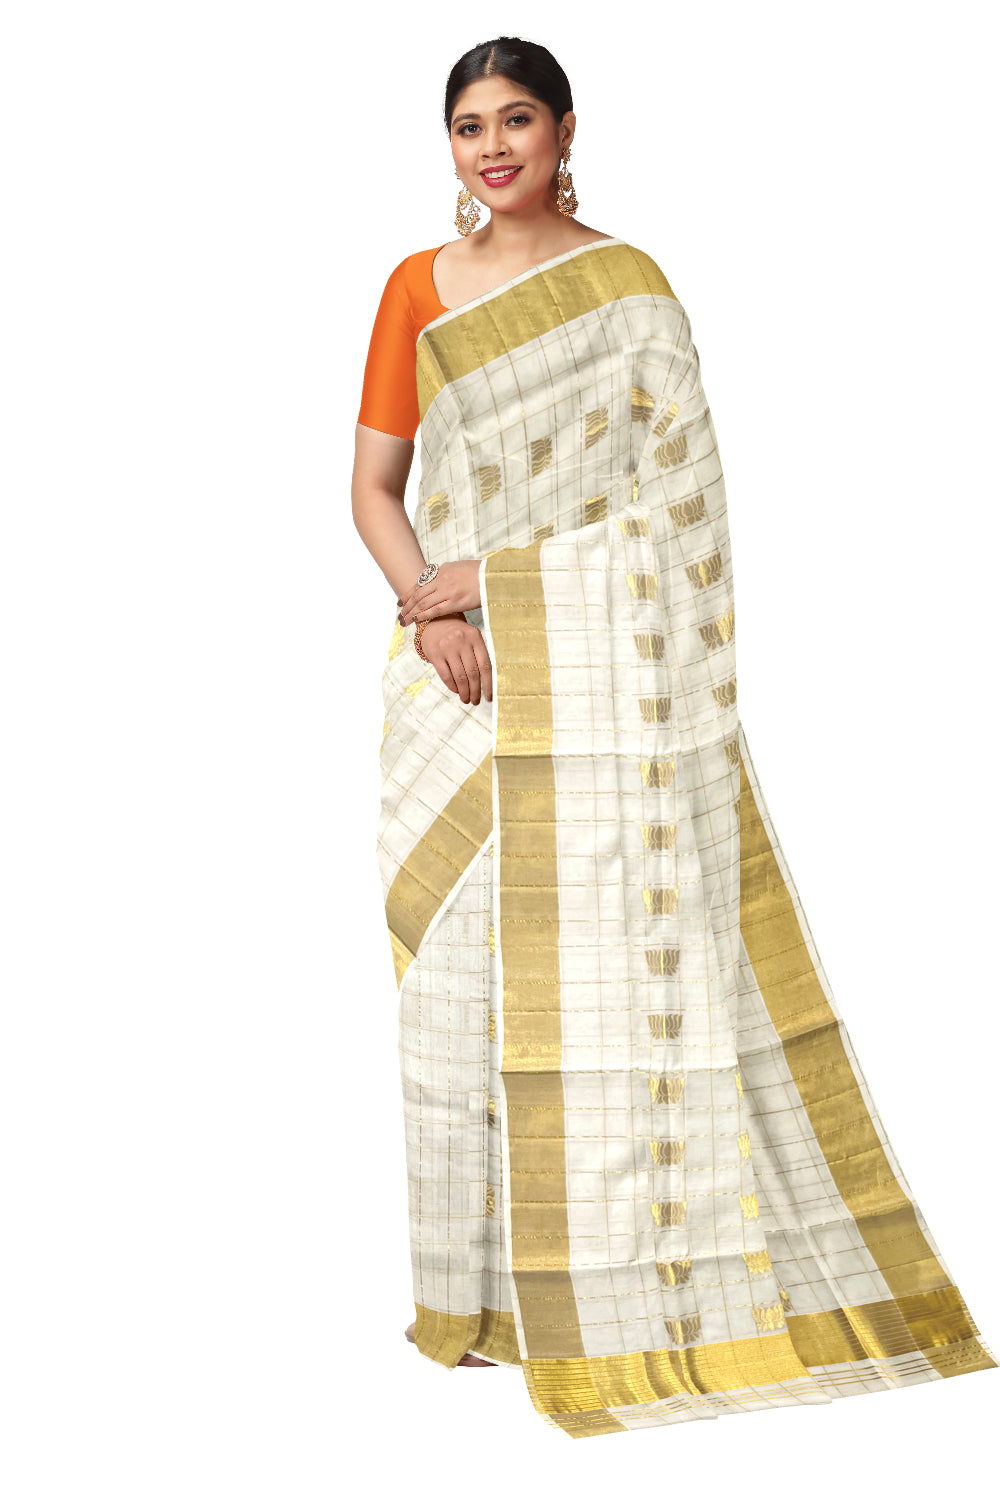 Southloom™ Premium Handloom Check Design Kerala Saree with Kasavu Lotus Woven Works